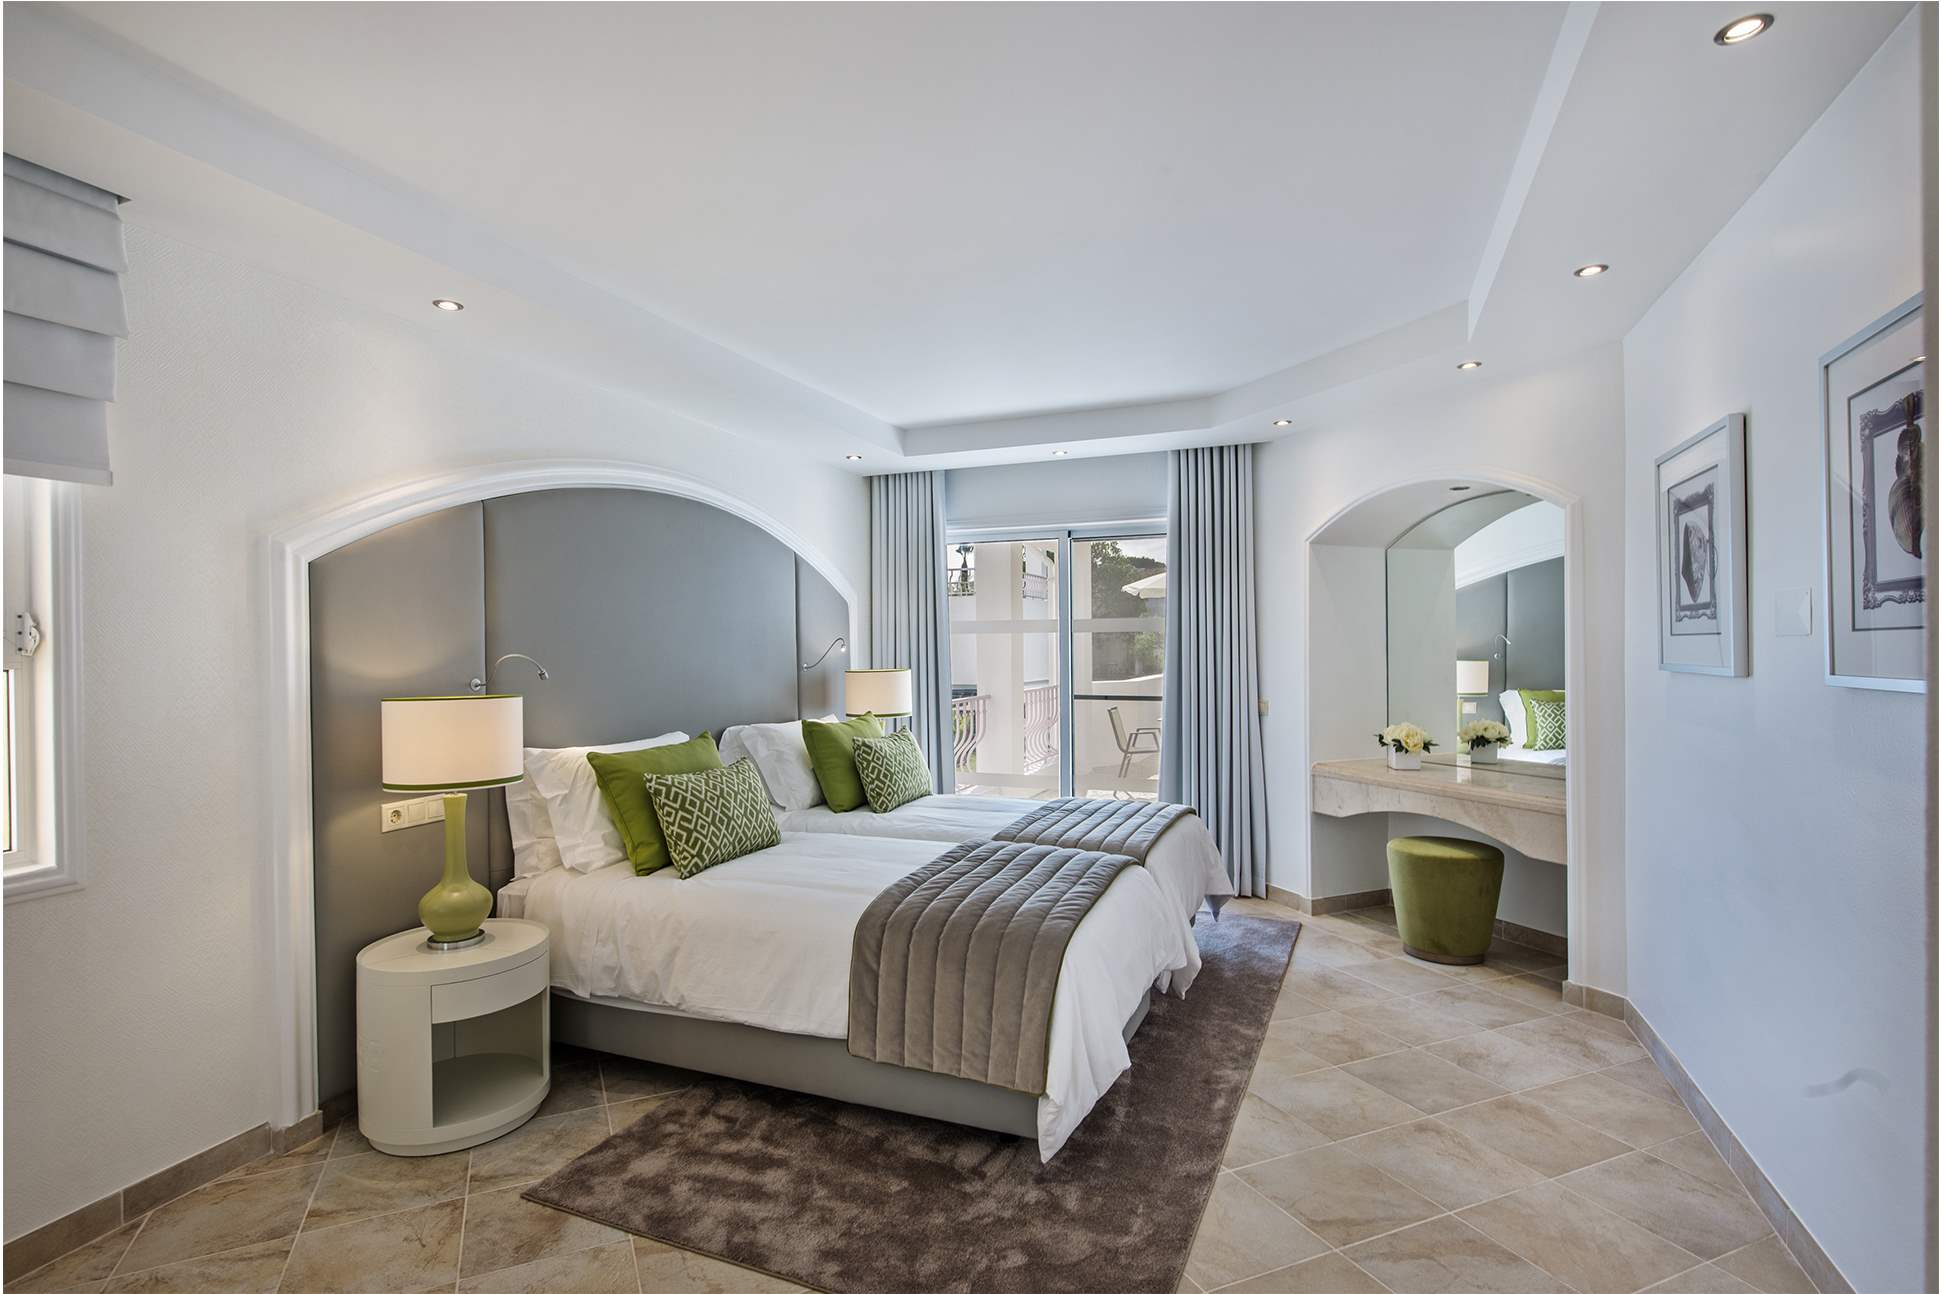 Four Seasons Fairways 3 Bed Hillside Apartment, Thursday Arrival, 3 bedroom villa in Four Seasons Fairways, Algarve Photo #7